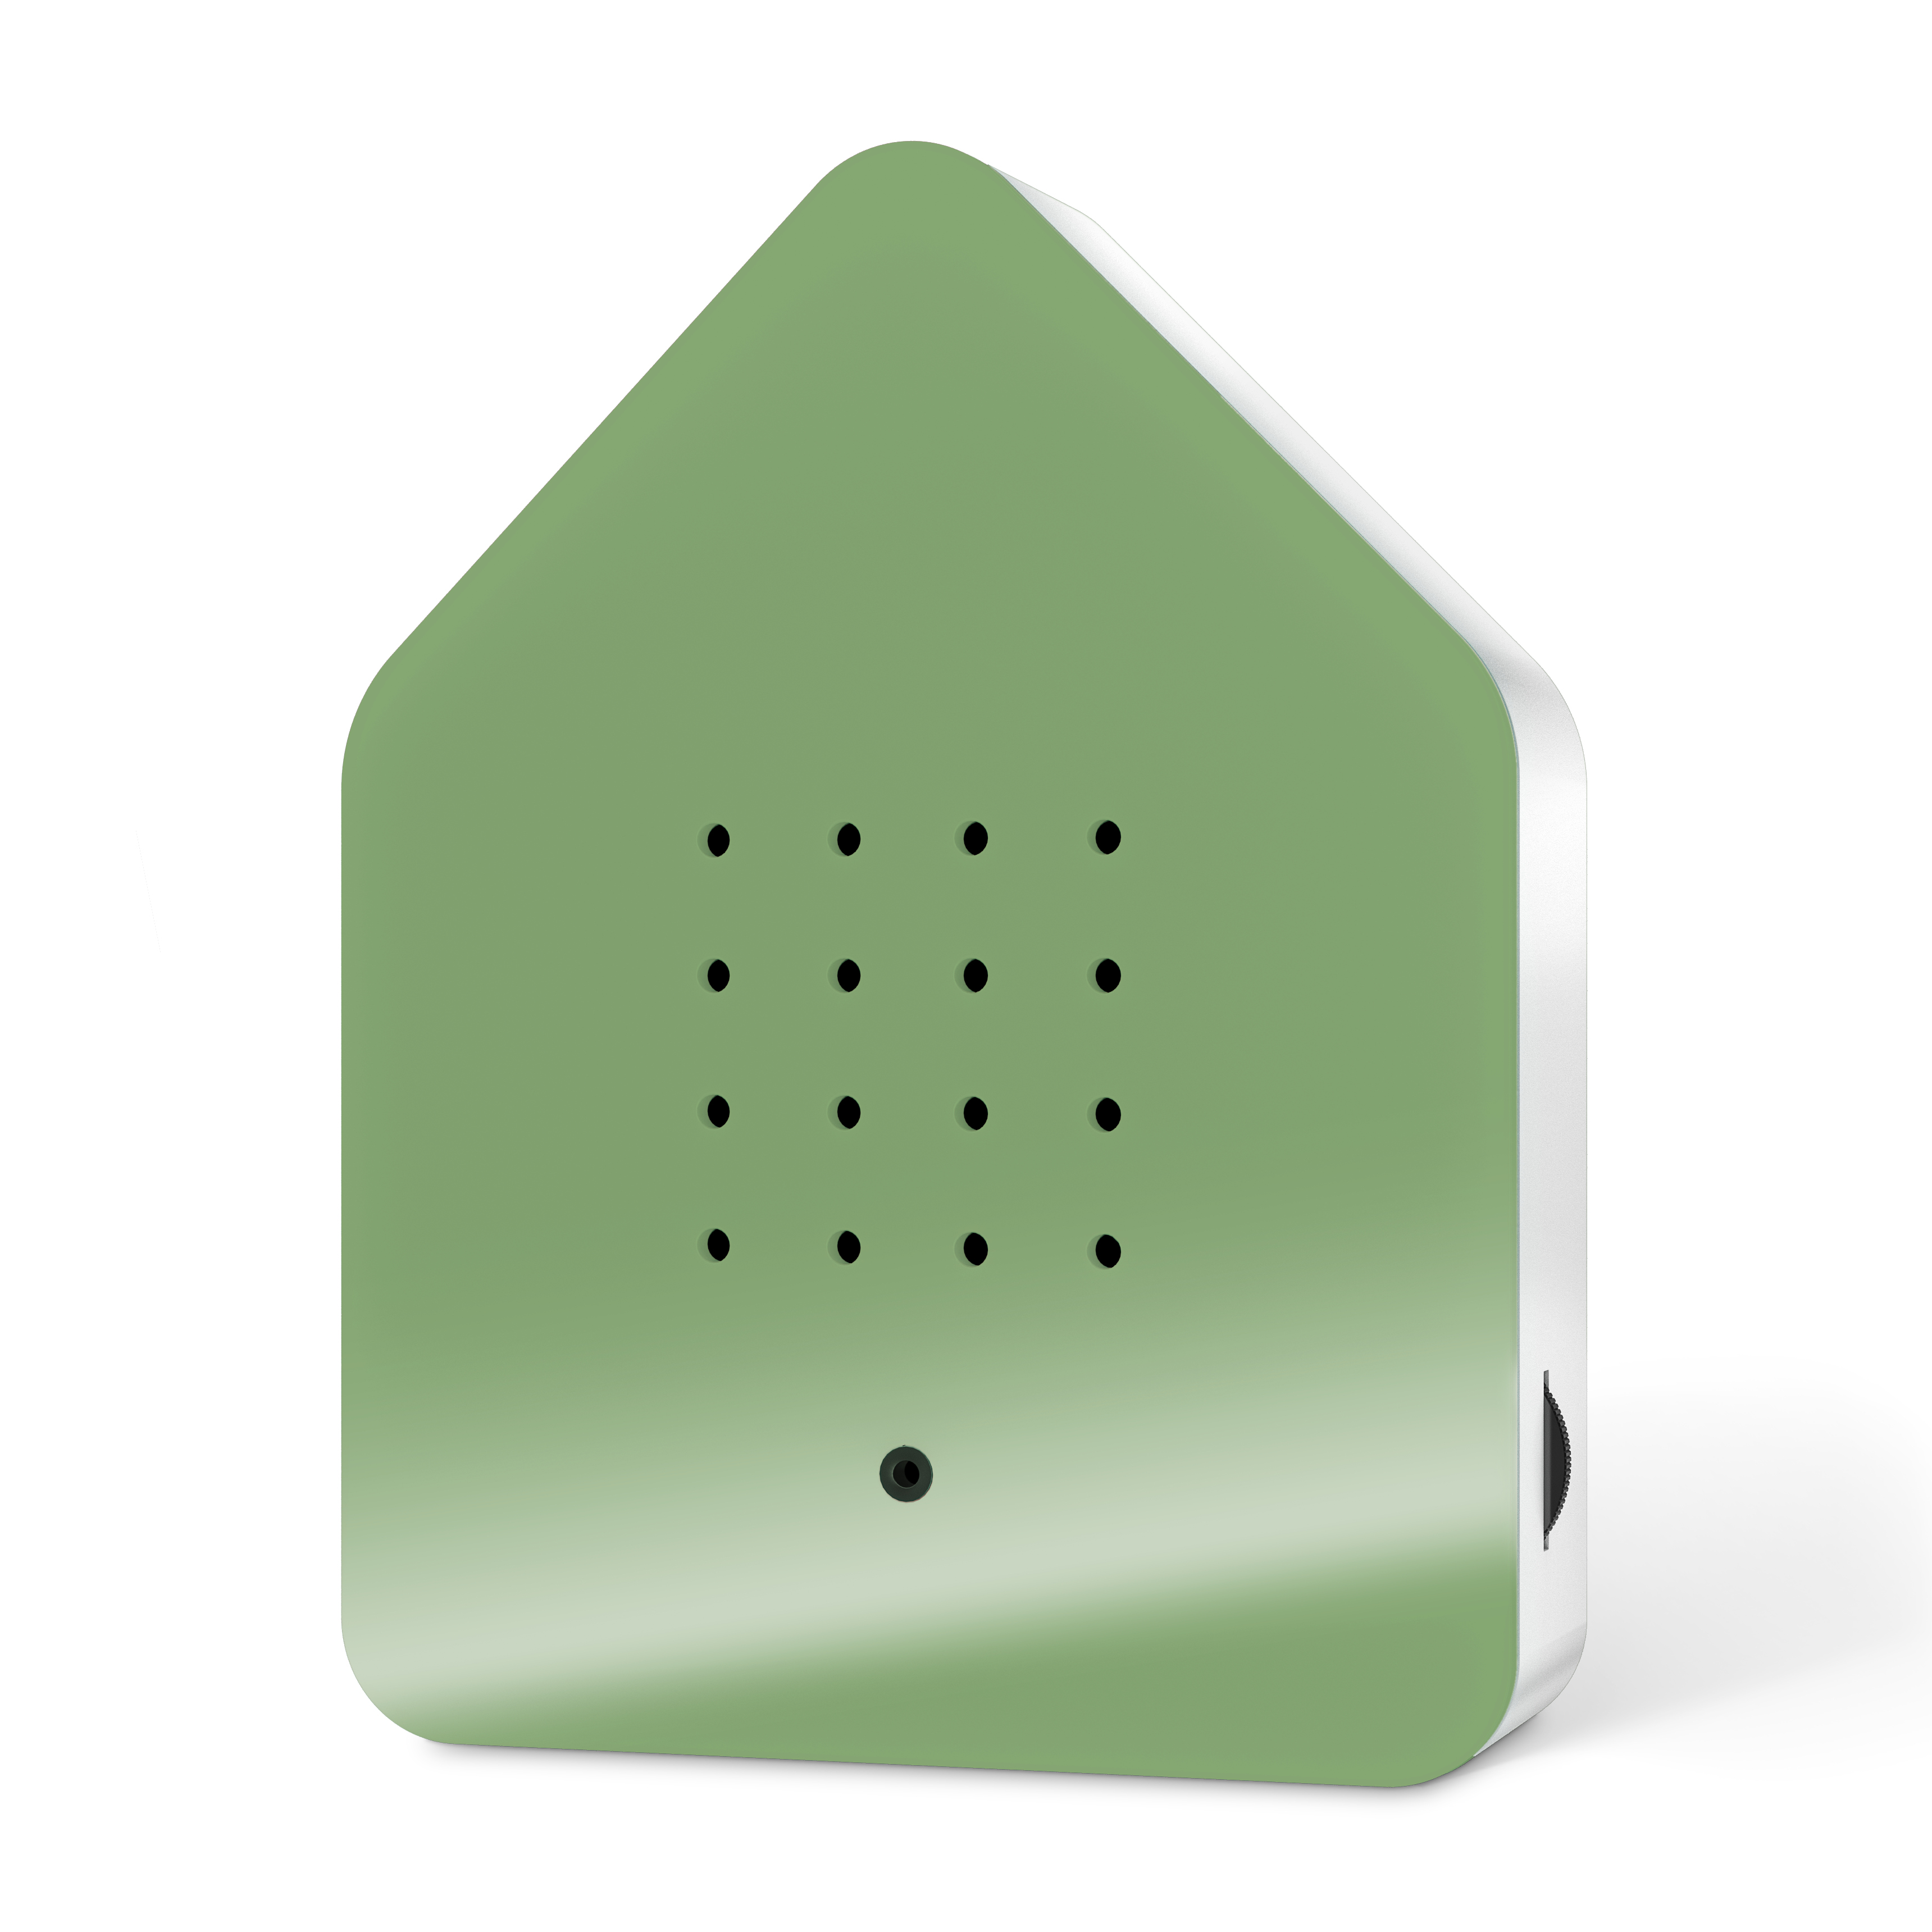 Relaxound Zwitscherbox Motion Sensor Sound Box In Green Birds Chirping & Forest Sounds